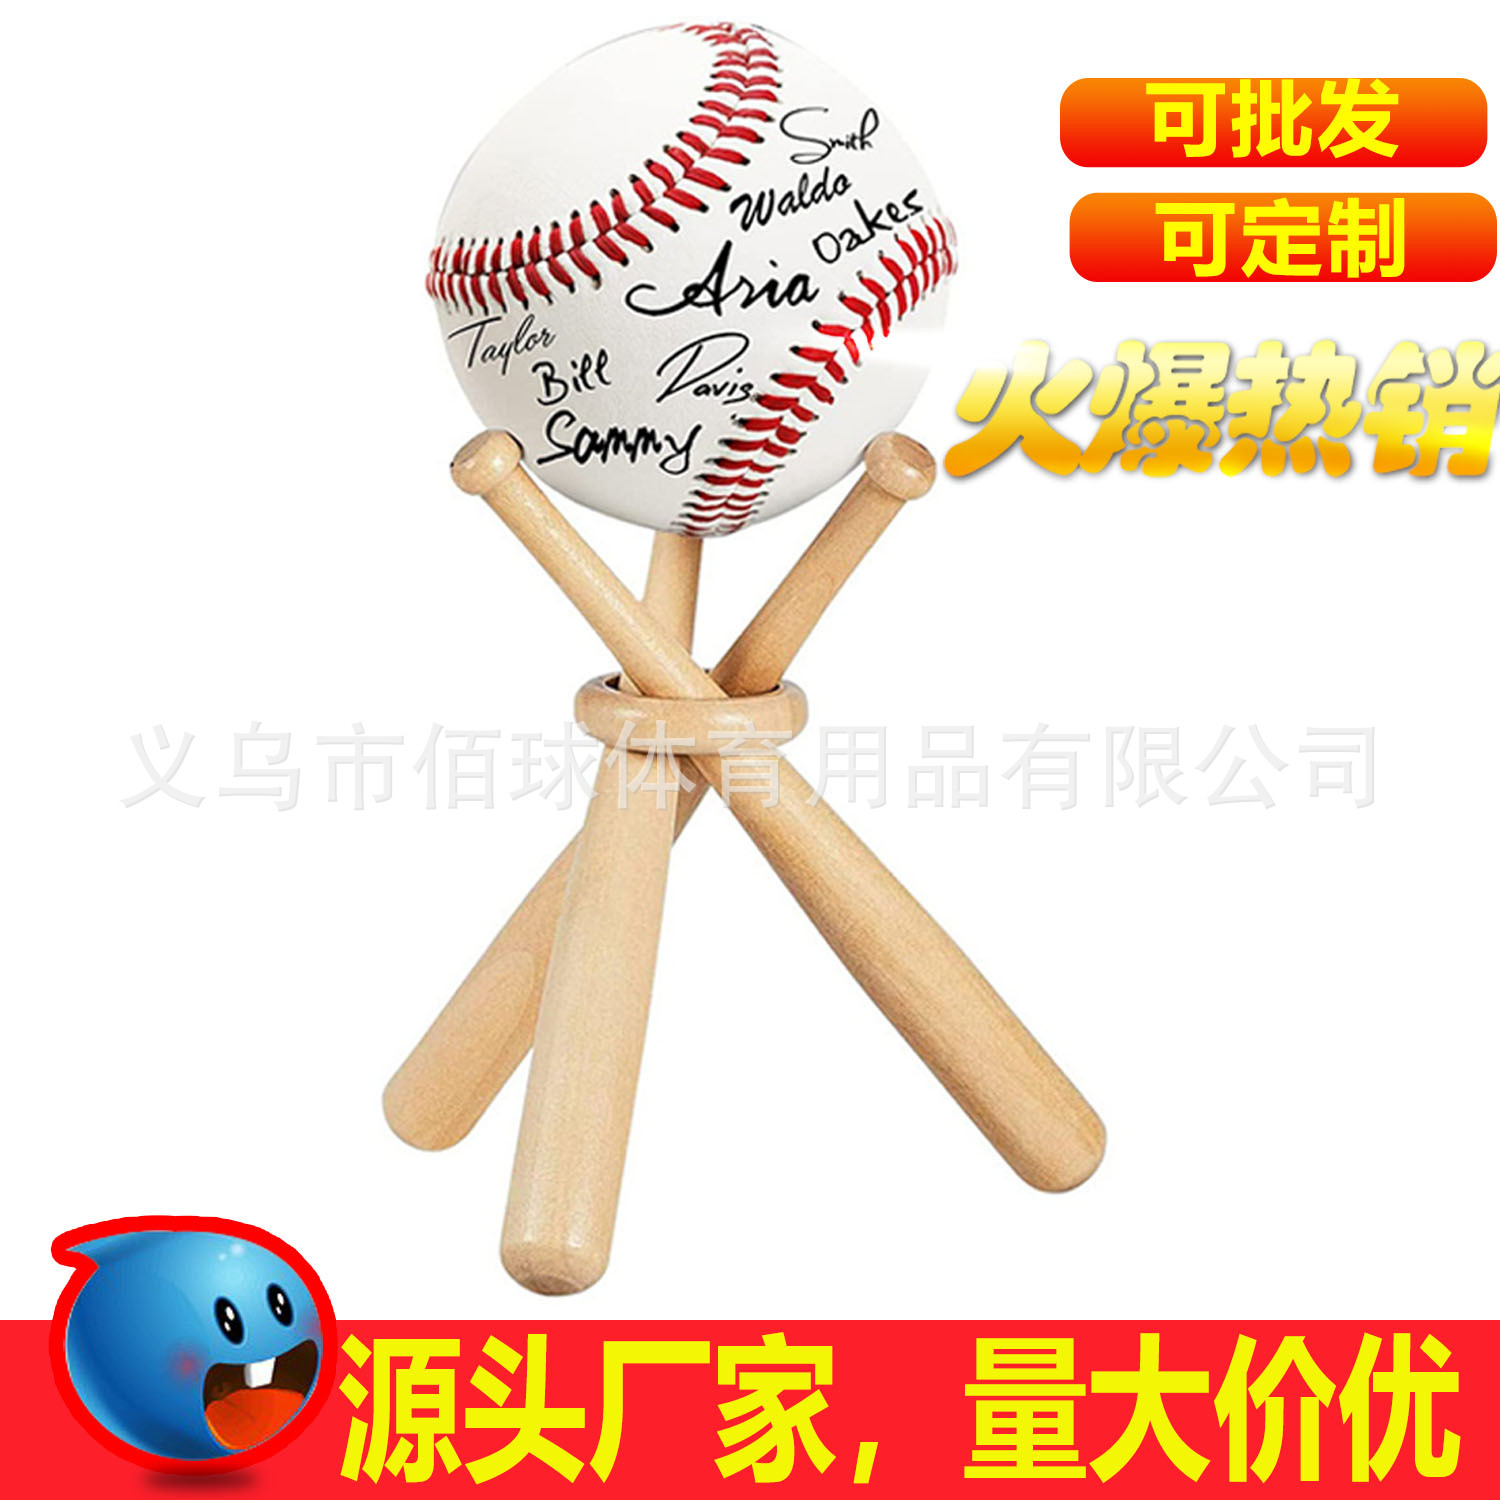 15cm Mini Baseball Bat Stand Wooden Baseball Crafts Display Stand Baseball Display Stand Wooden Stick